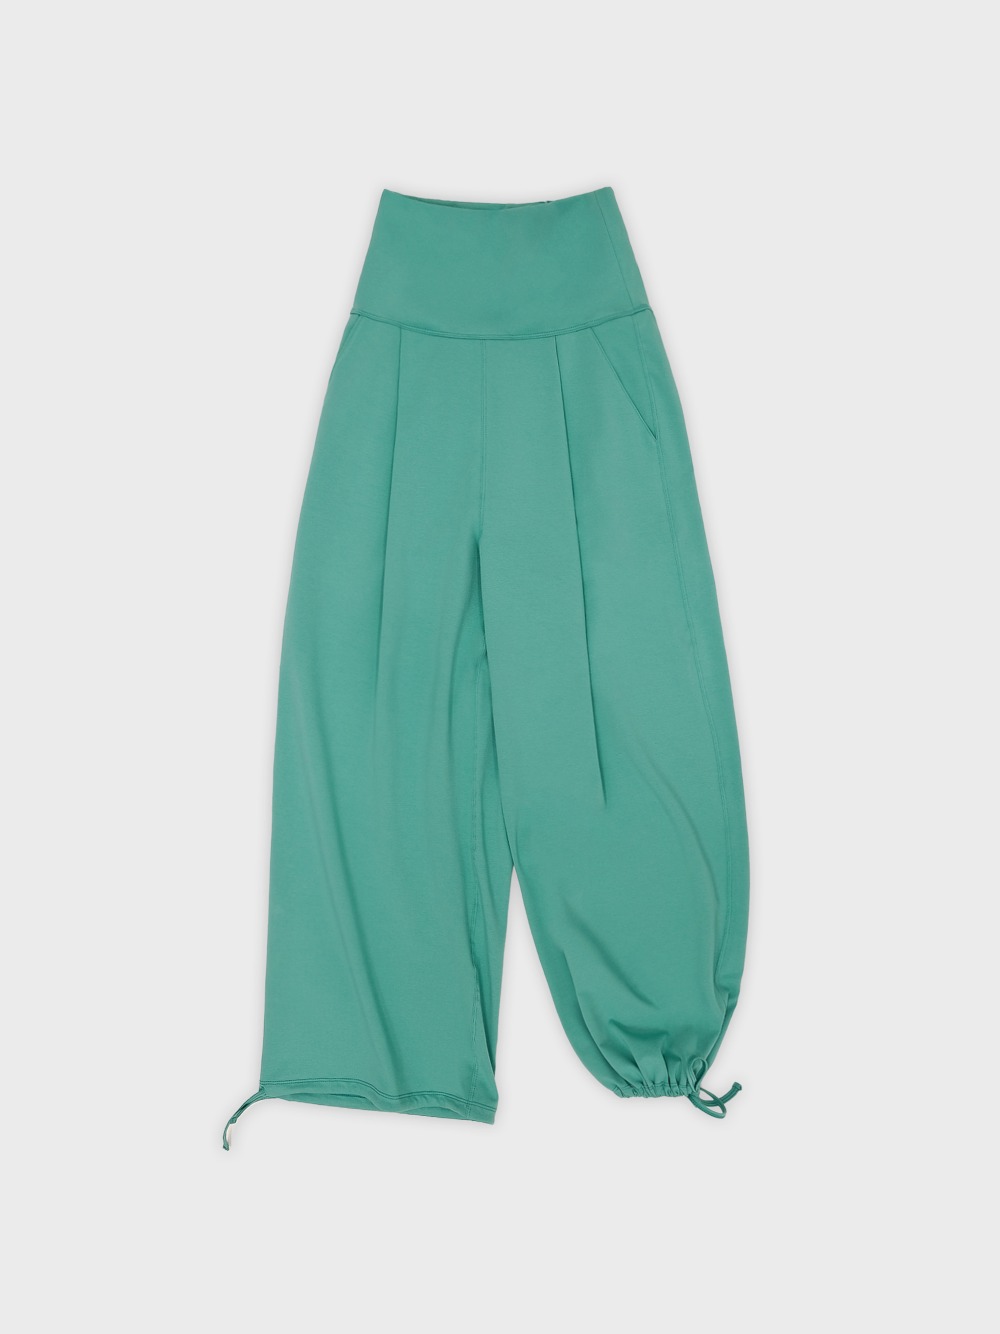 (*NEW) Surya string pants - aqua green